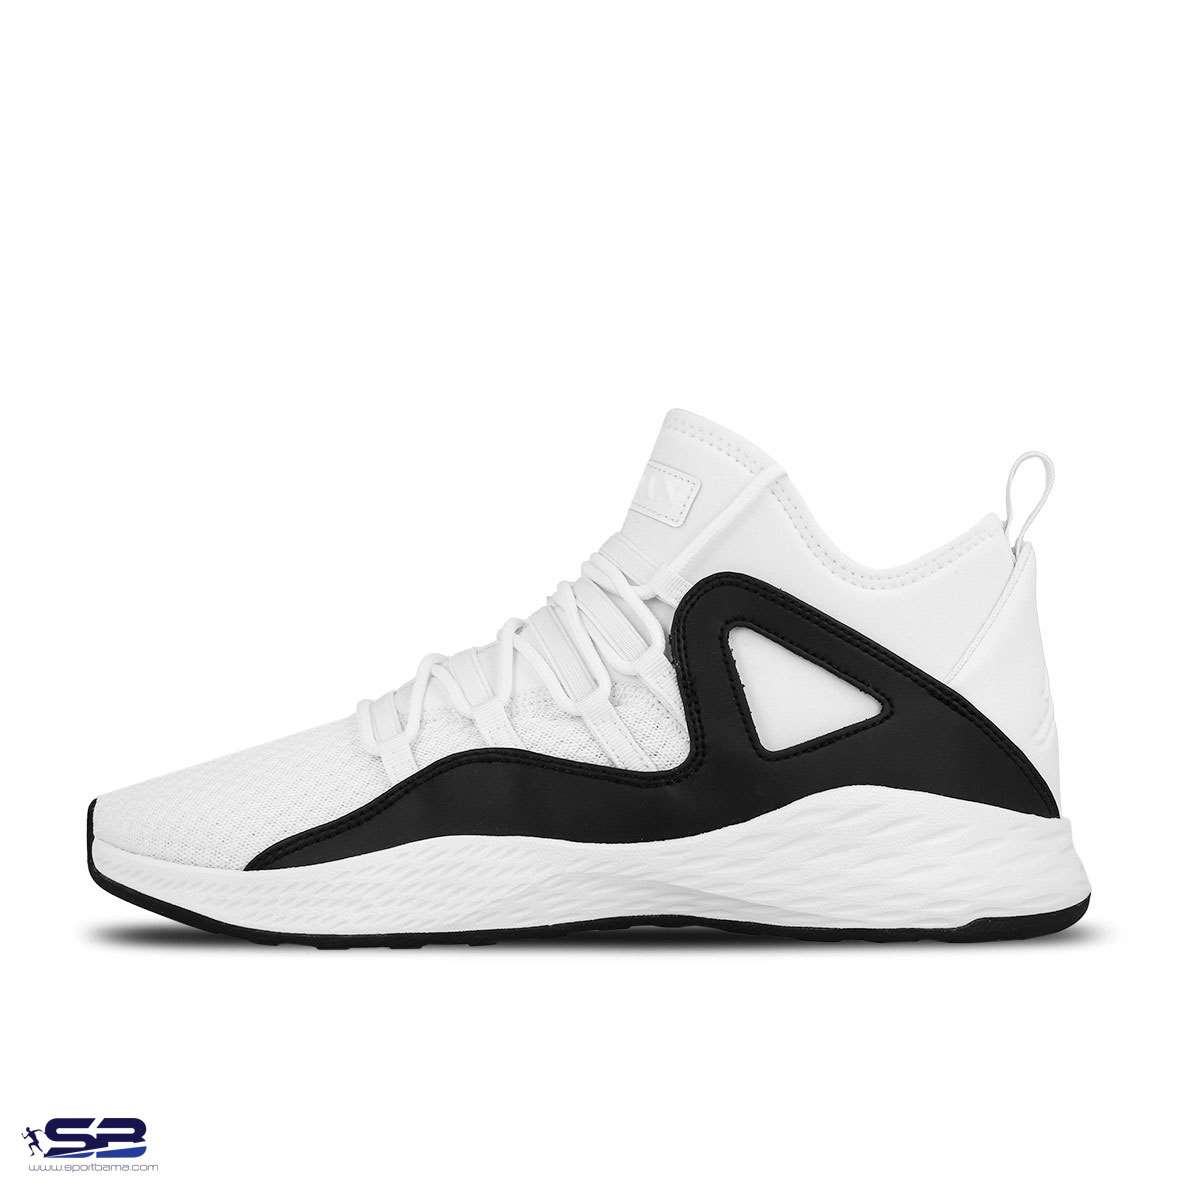  خرید  کتانی  بسکتبال نایک جردن فرمولا          Nike Jordan Formula  881465-100